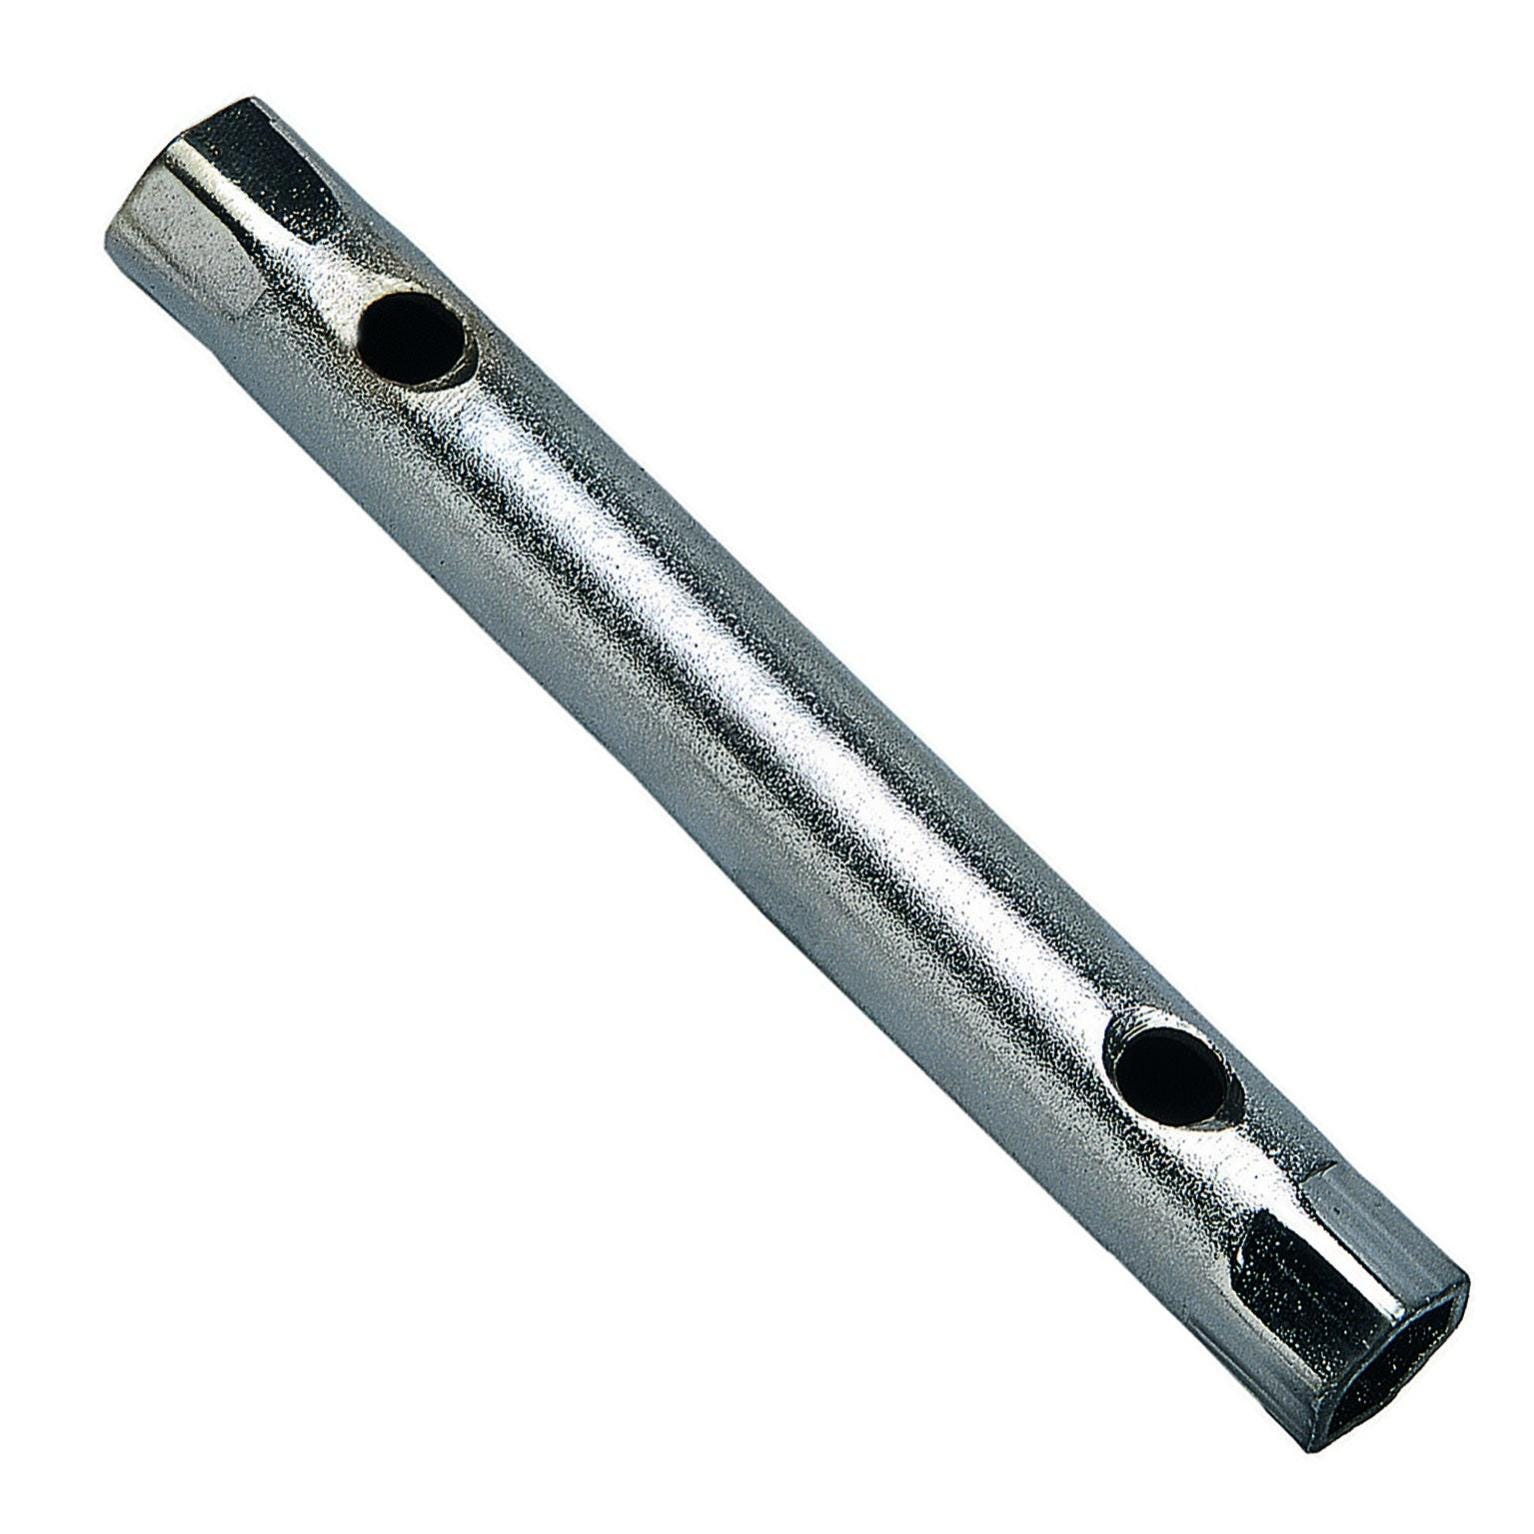 Chiave a tubo esagonale 17 mm in acciaio